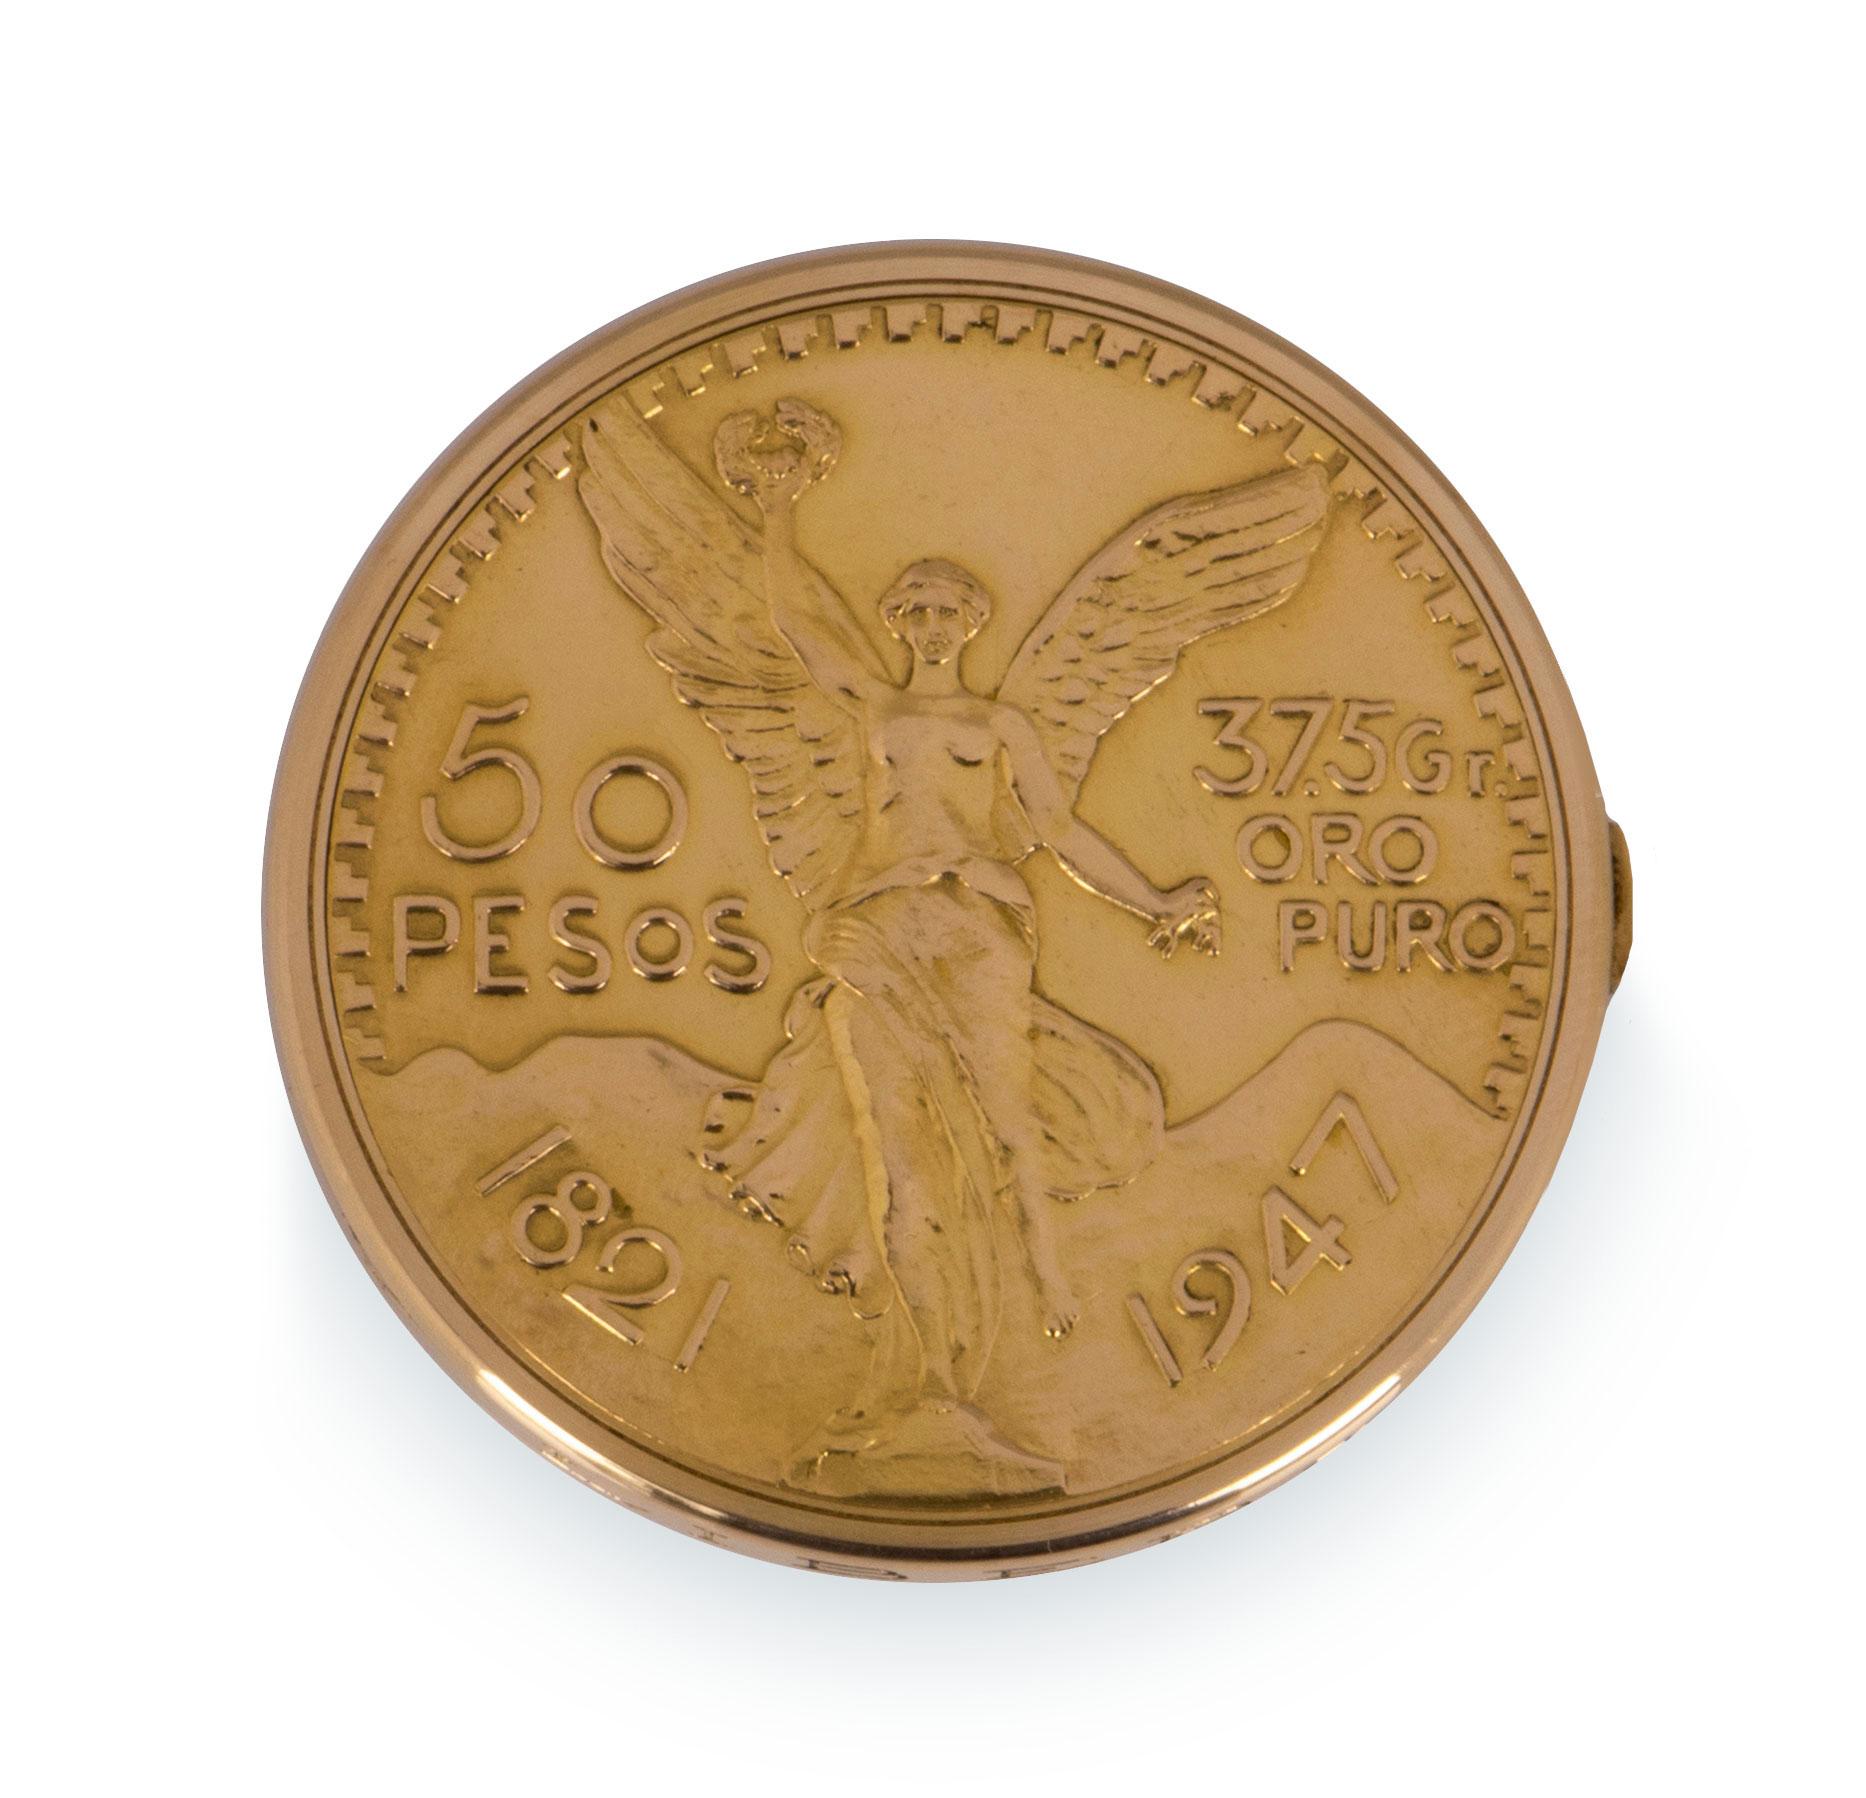 rolex centenario coin watch